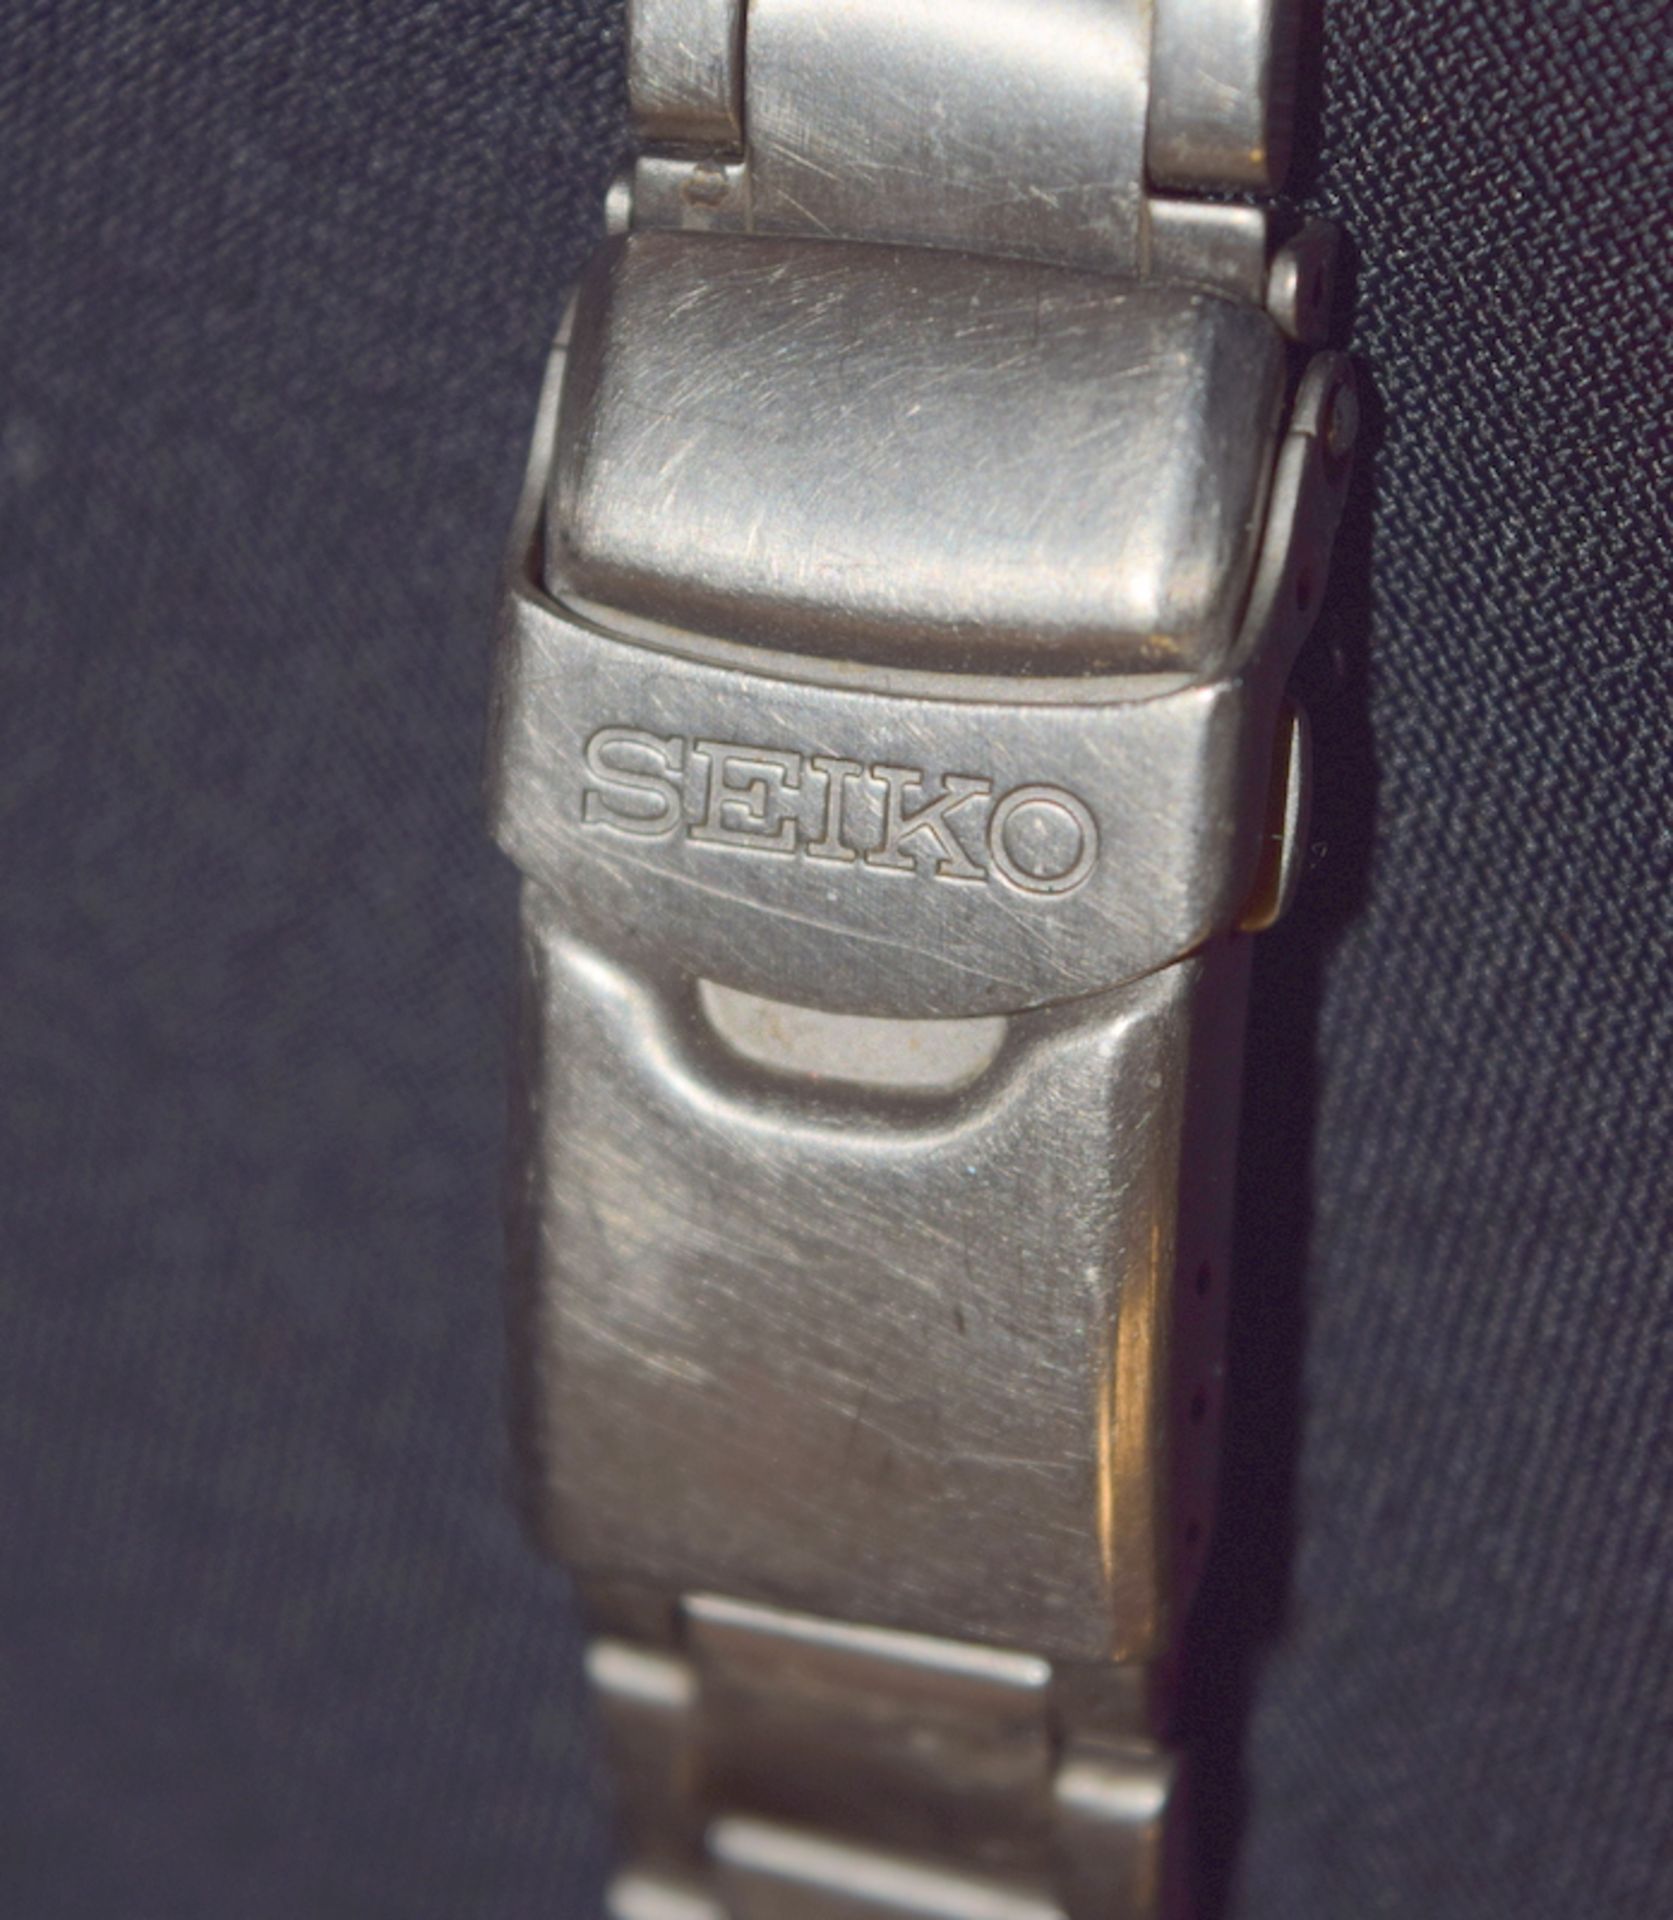 Vintage Seiko Titanium Ultrasonic Alarm Watch - Image 6 of 6